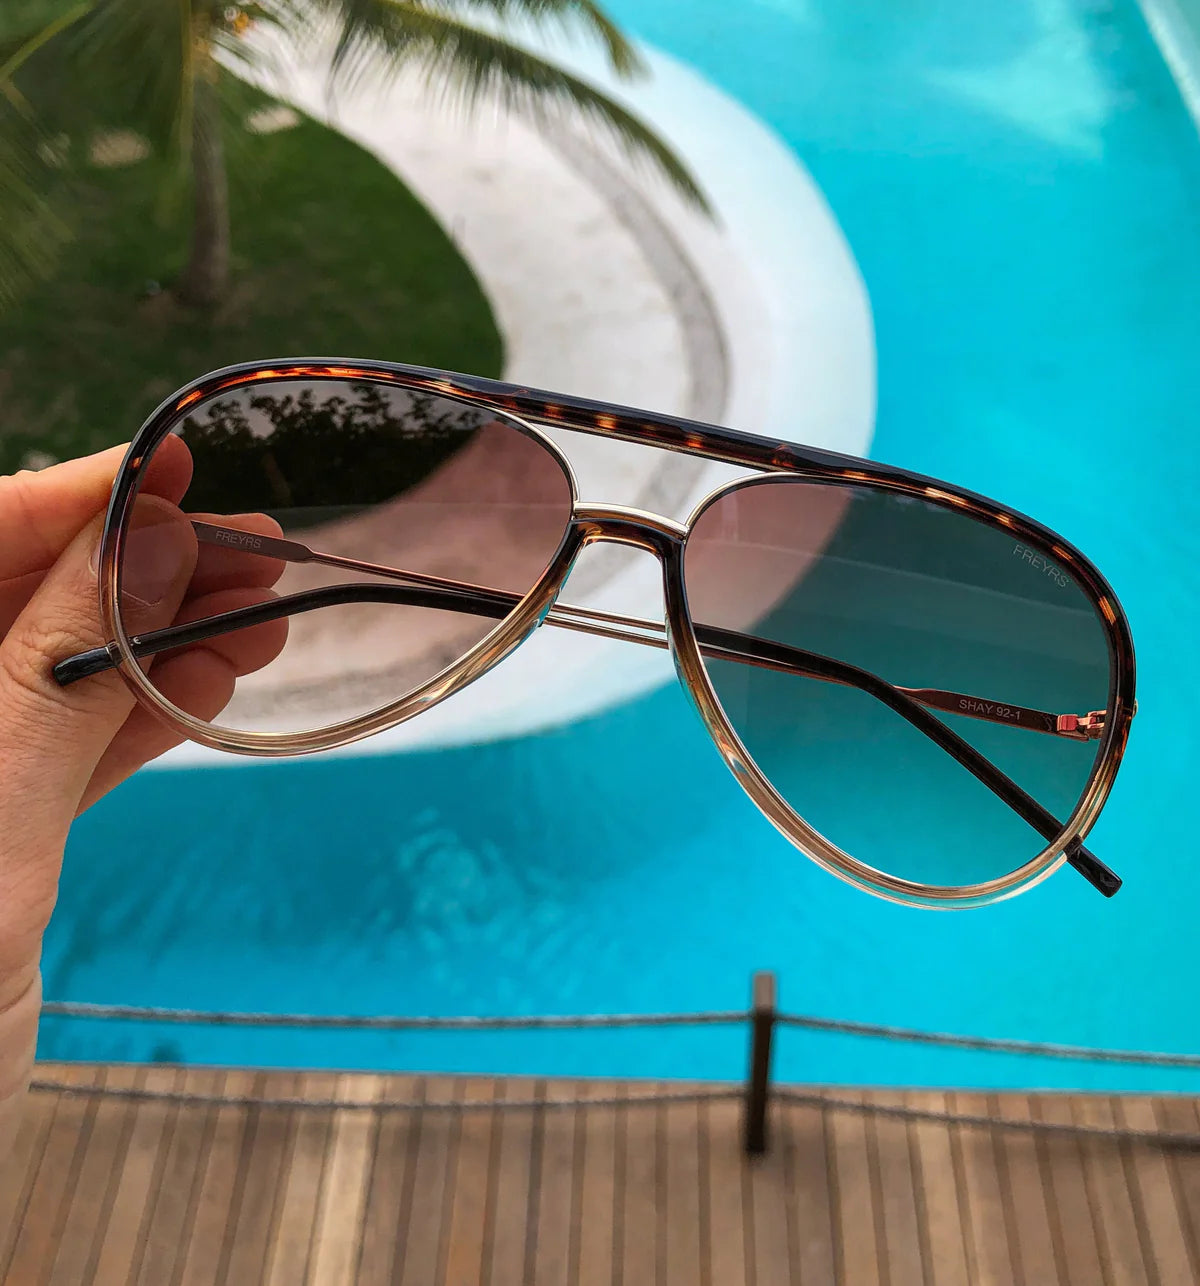 Sunglasses- Shay Tortoise Gold Mirror (92-5)